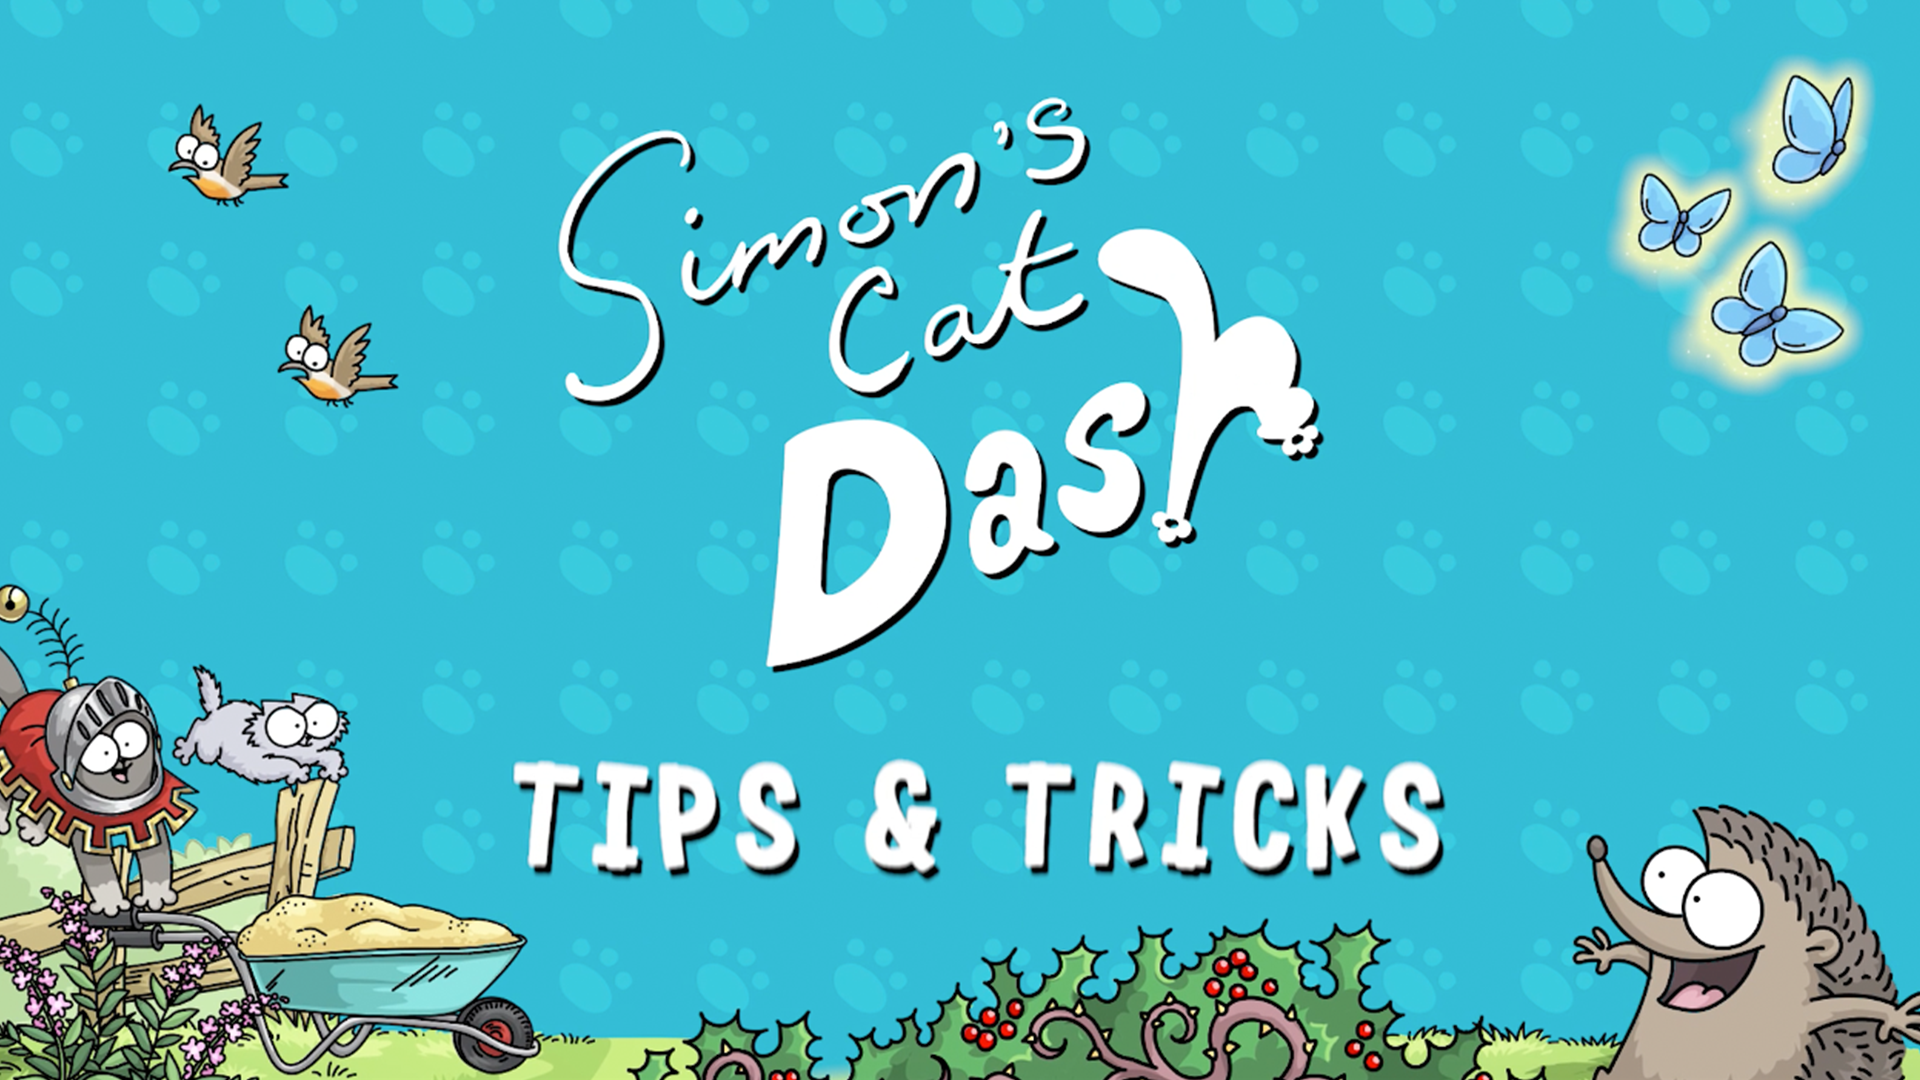 Simon's Cat Game Tips